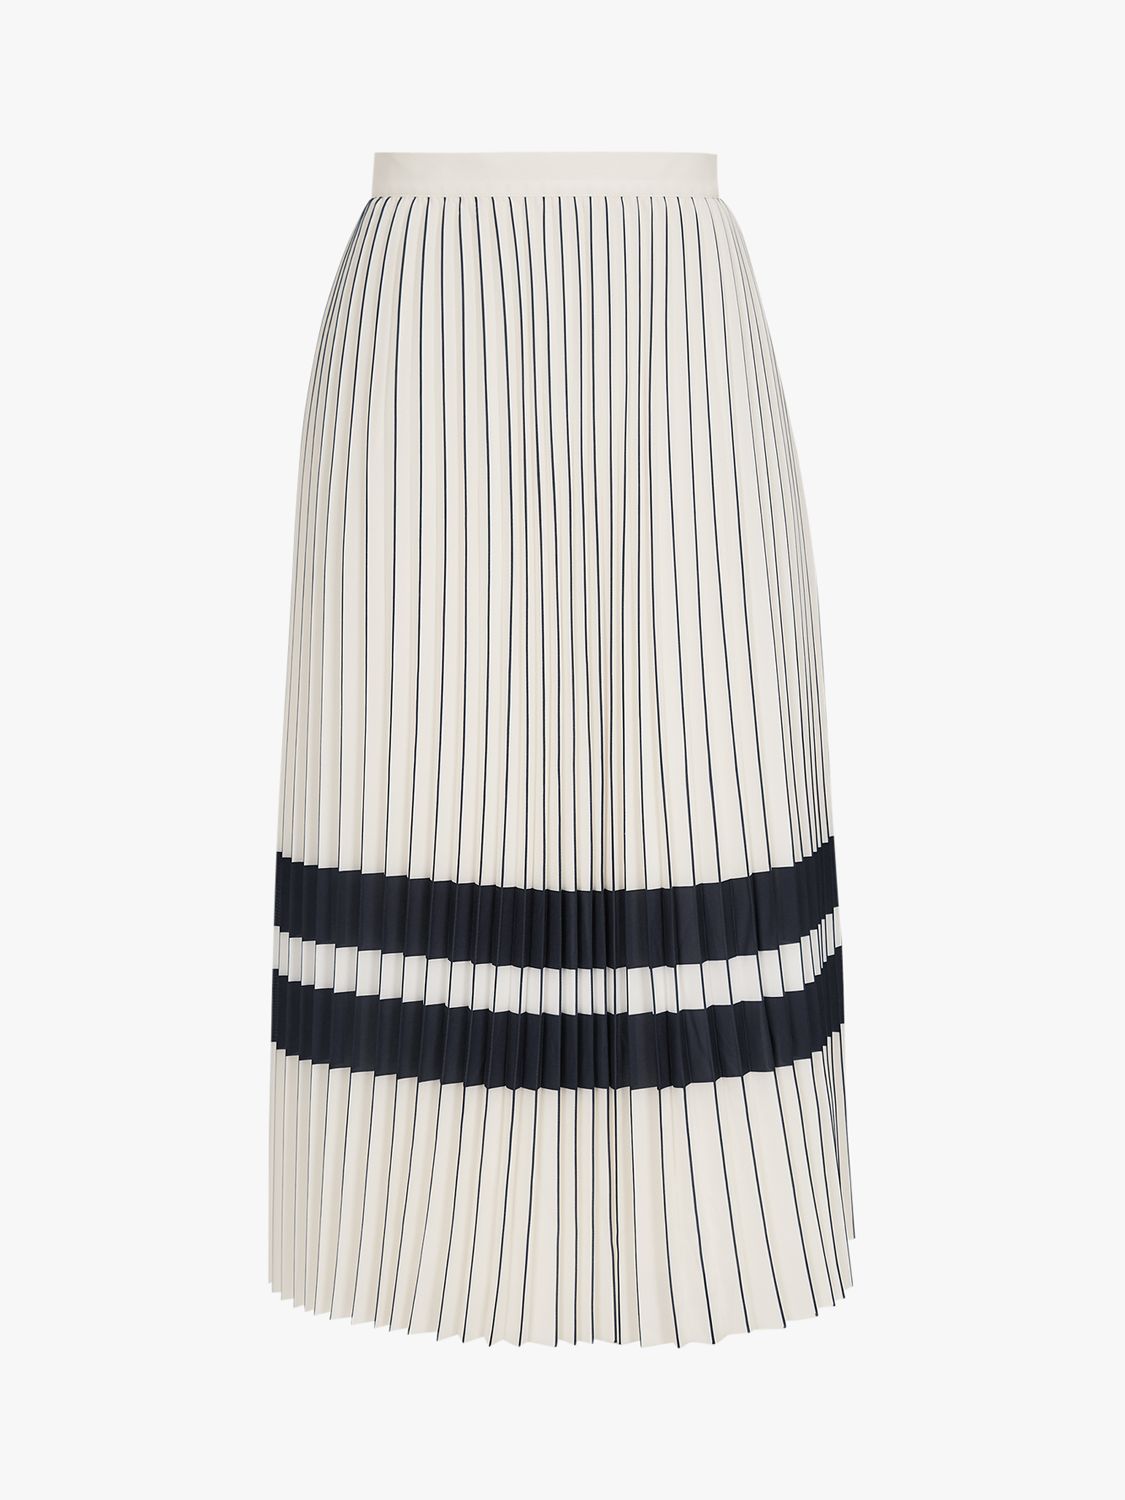 Reiss Annabelle Pleated Midi Skirt, Cream/Navy